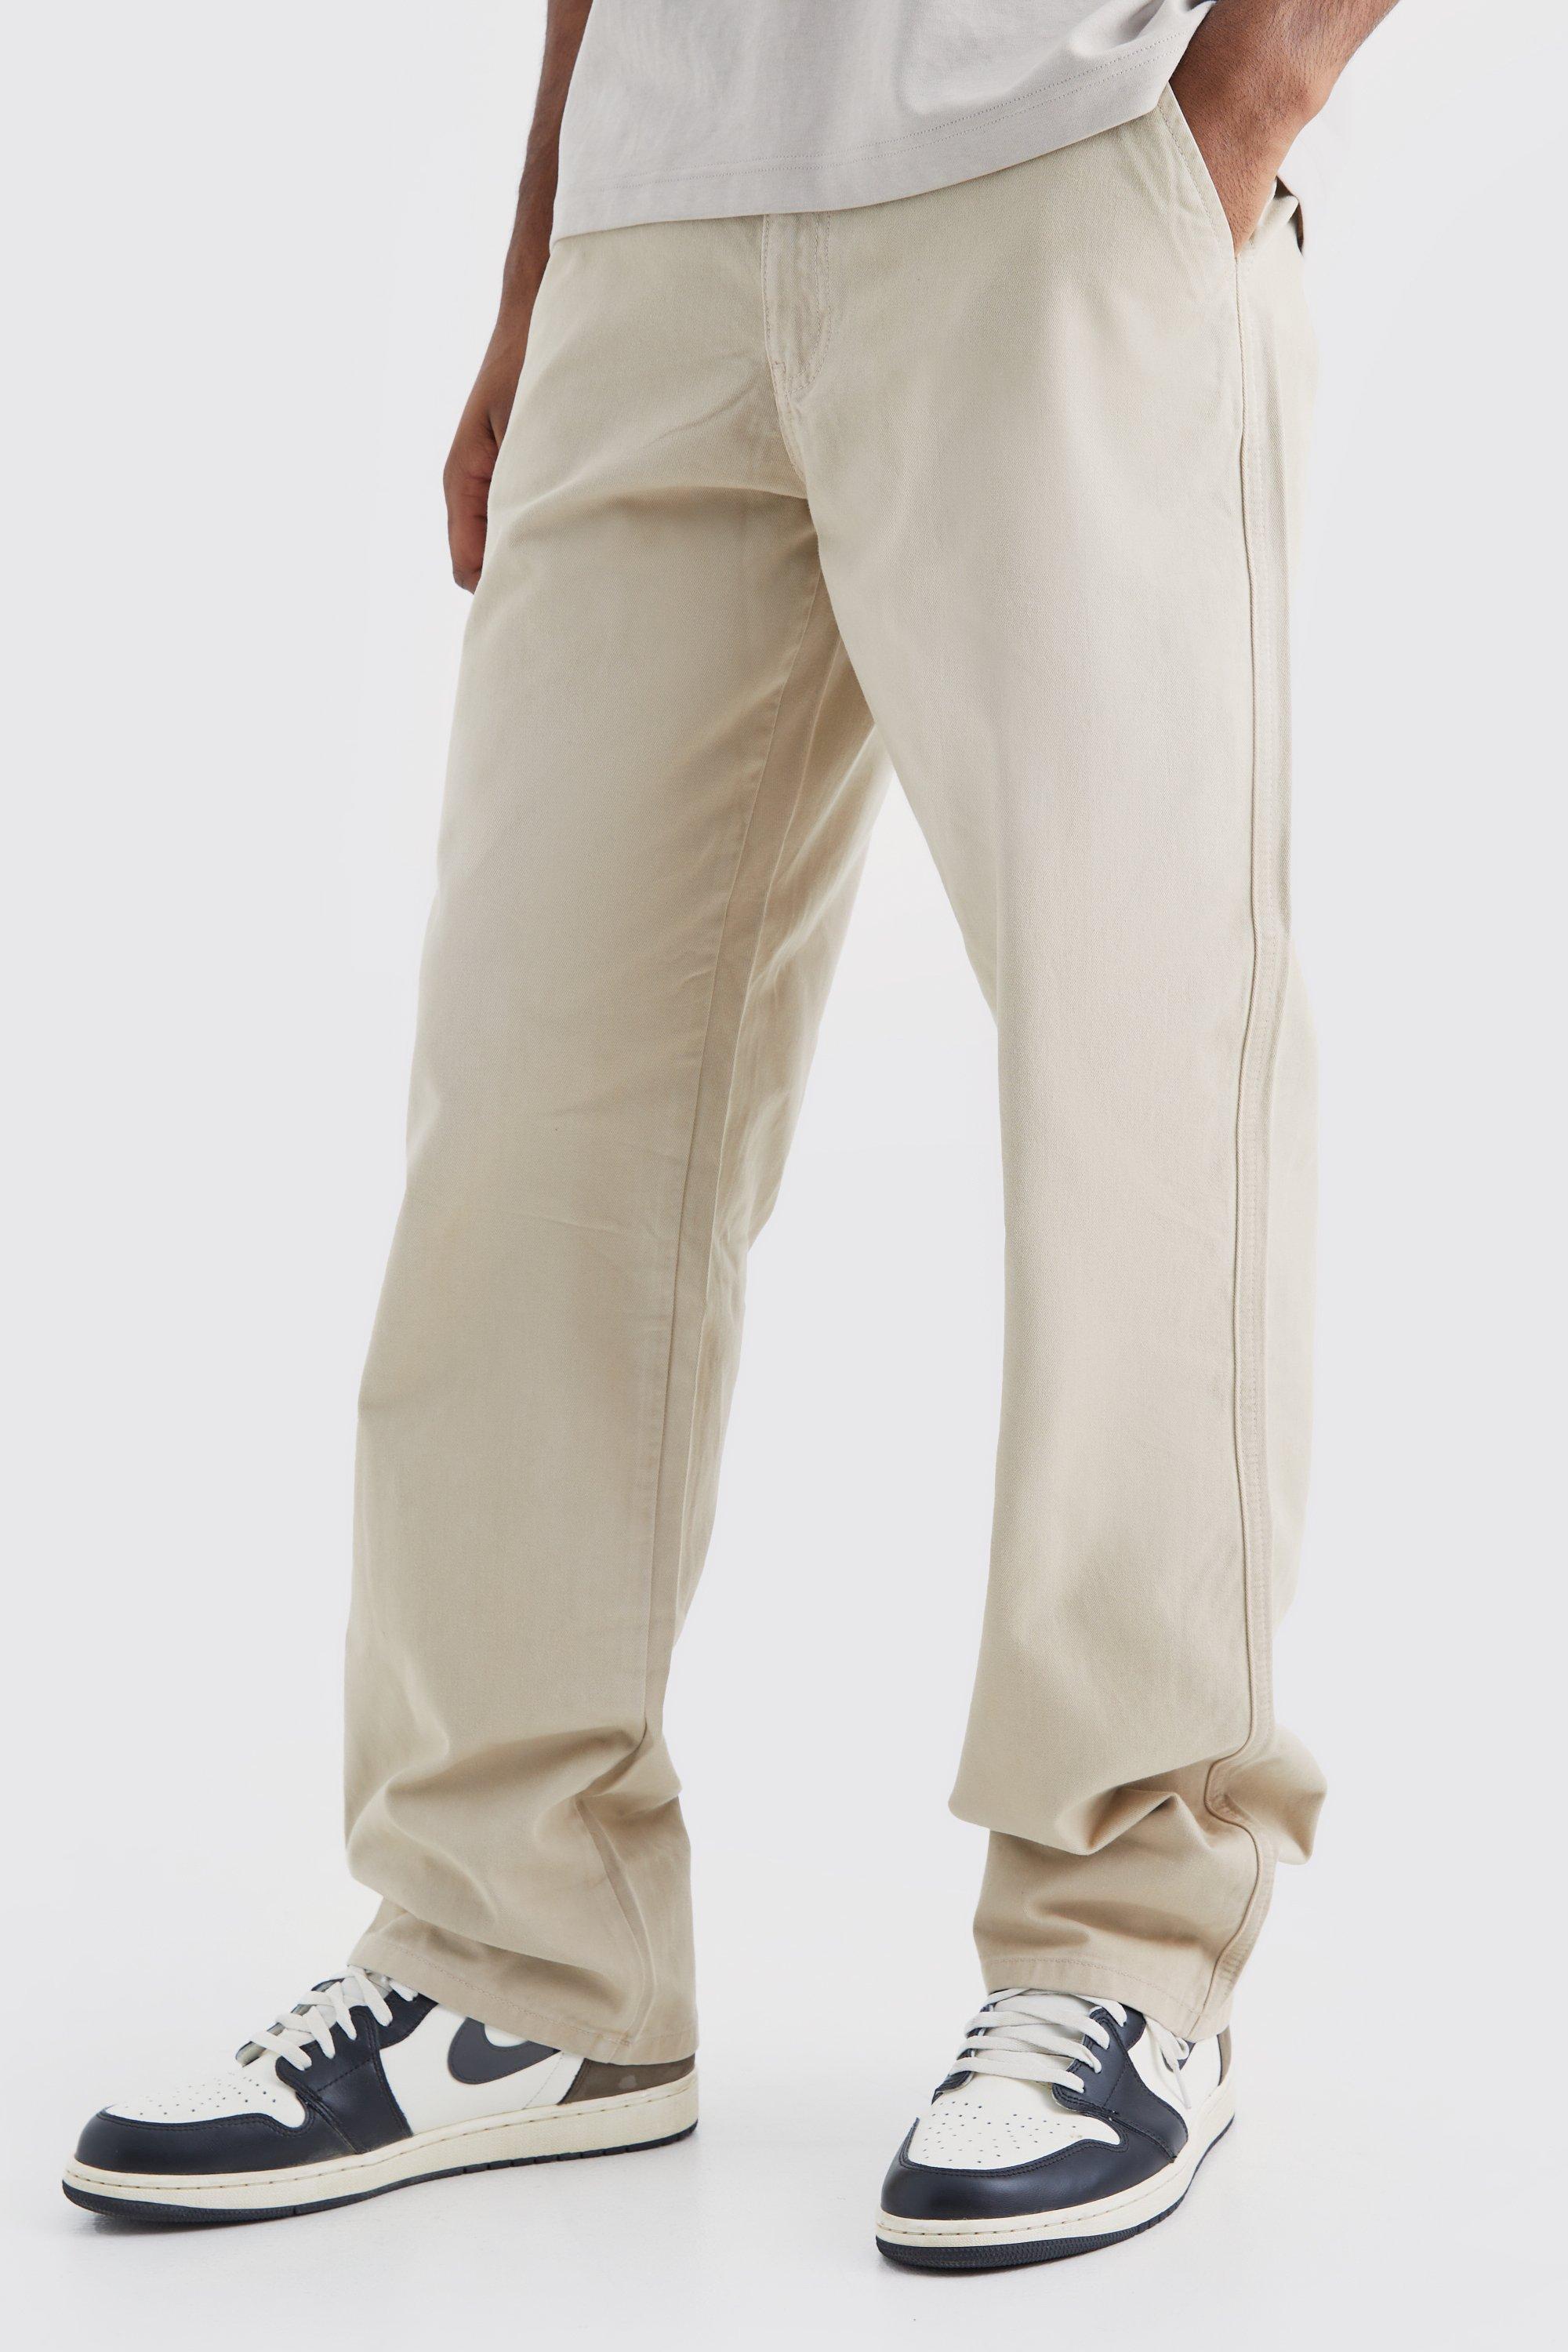 tall - pantalon chino large homme - pierre - 38, pierre